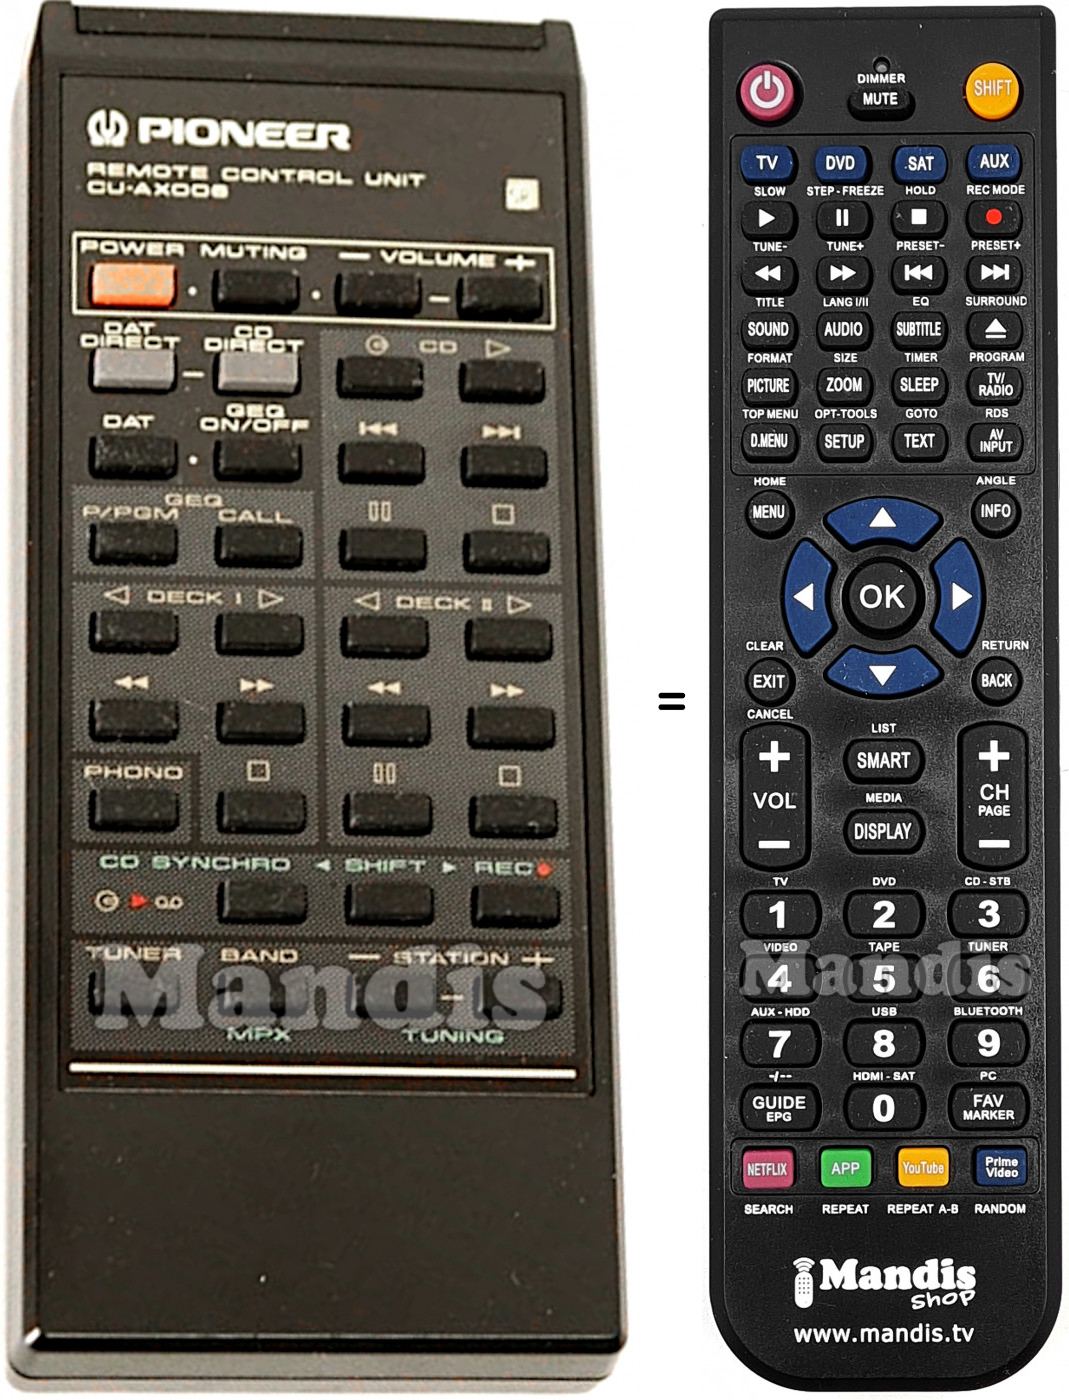 Replacement remote control Pioneer CU-AX006